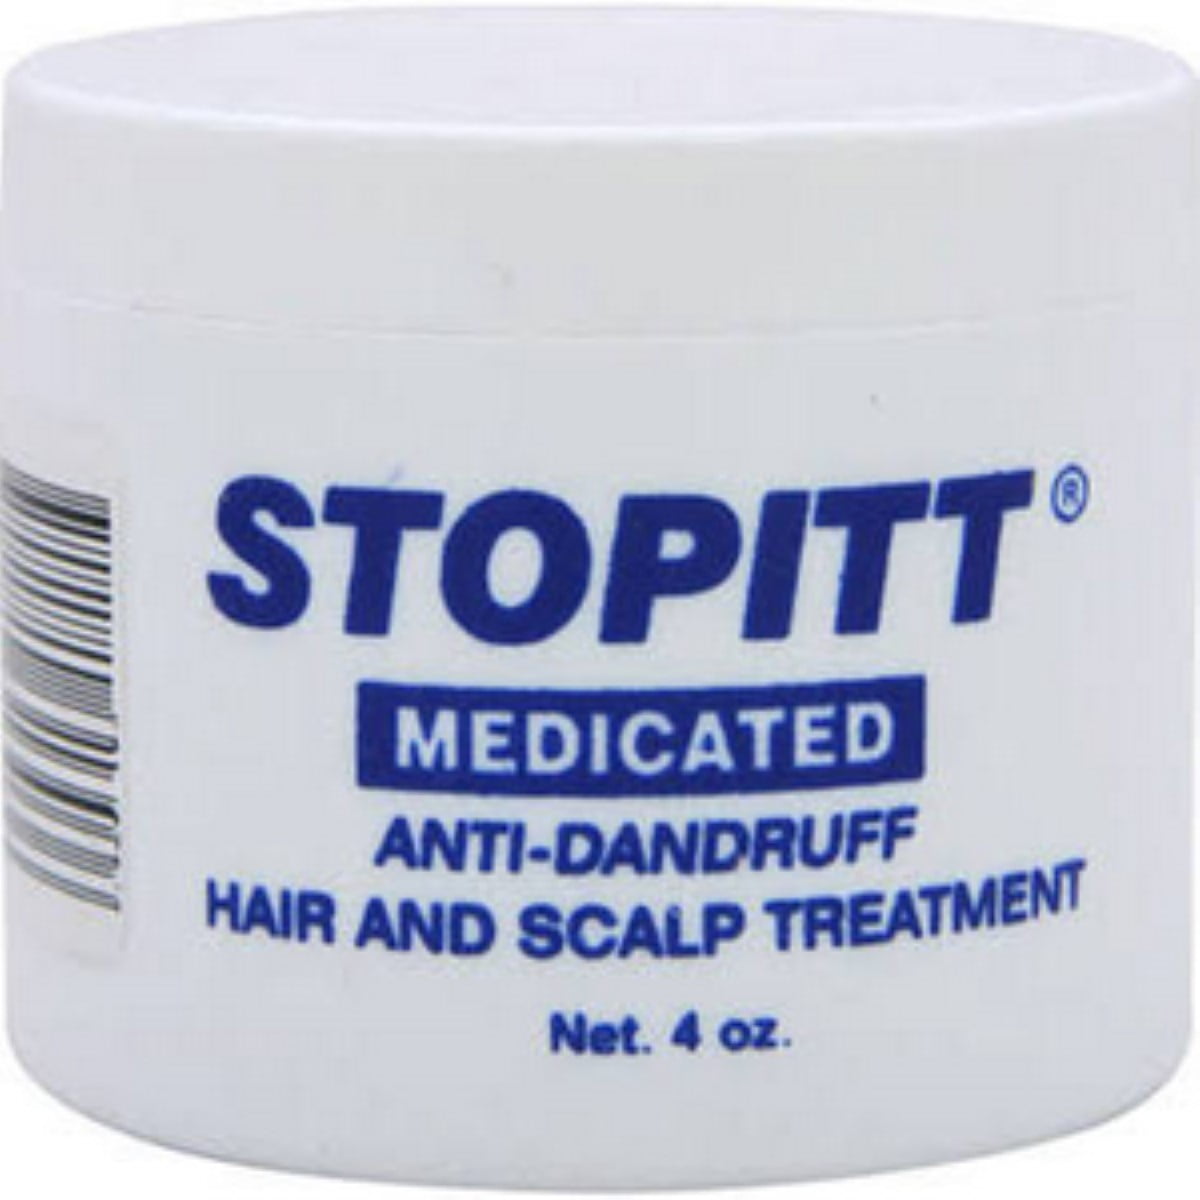 Stopitt Medicated Anti-Dandruff Hair & Scalp Treatment, 4 oz 